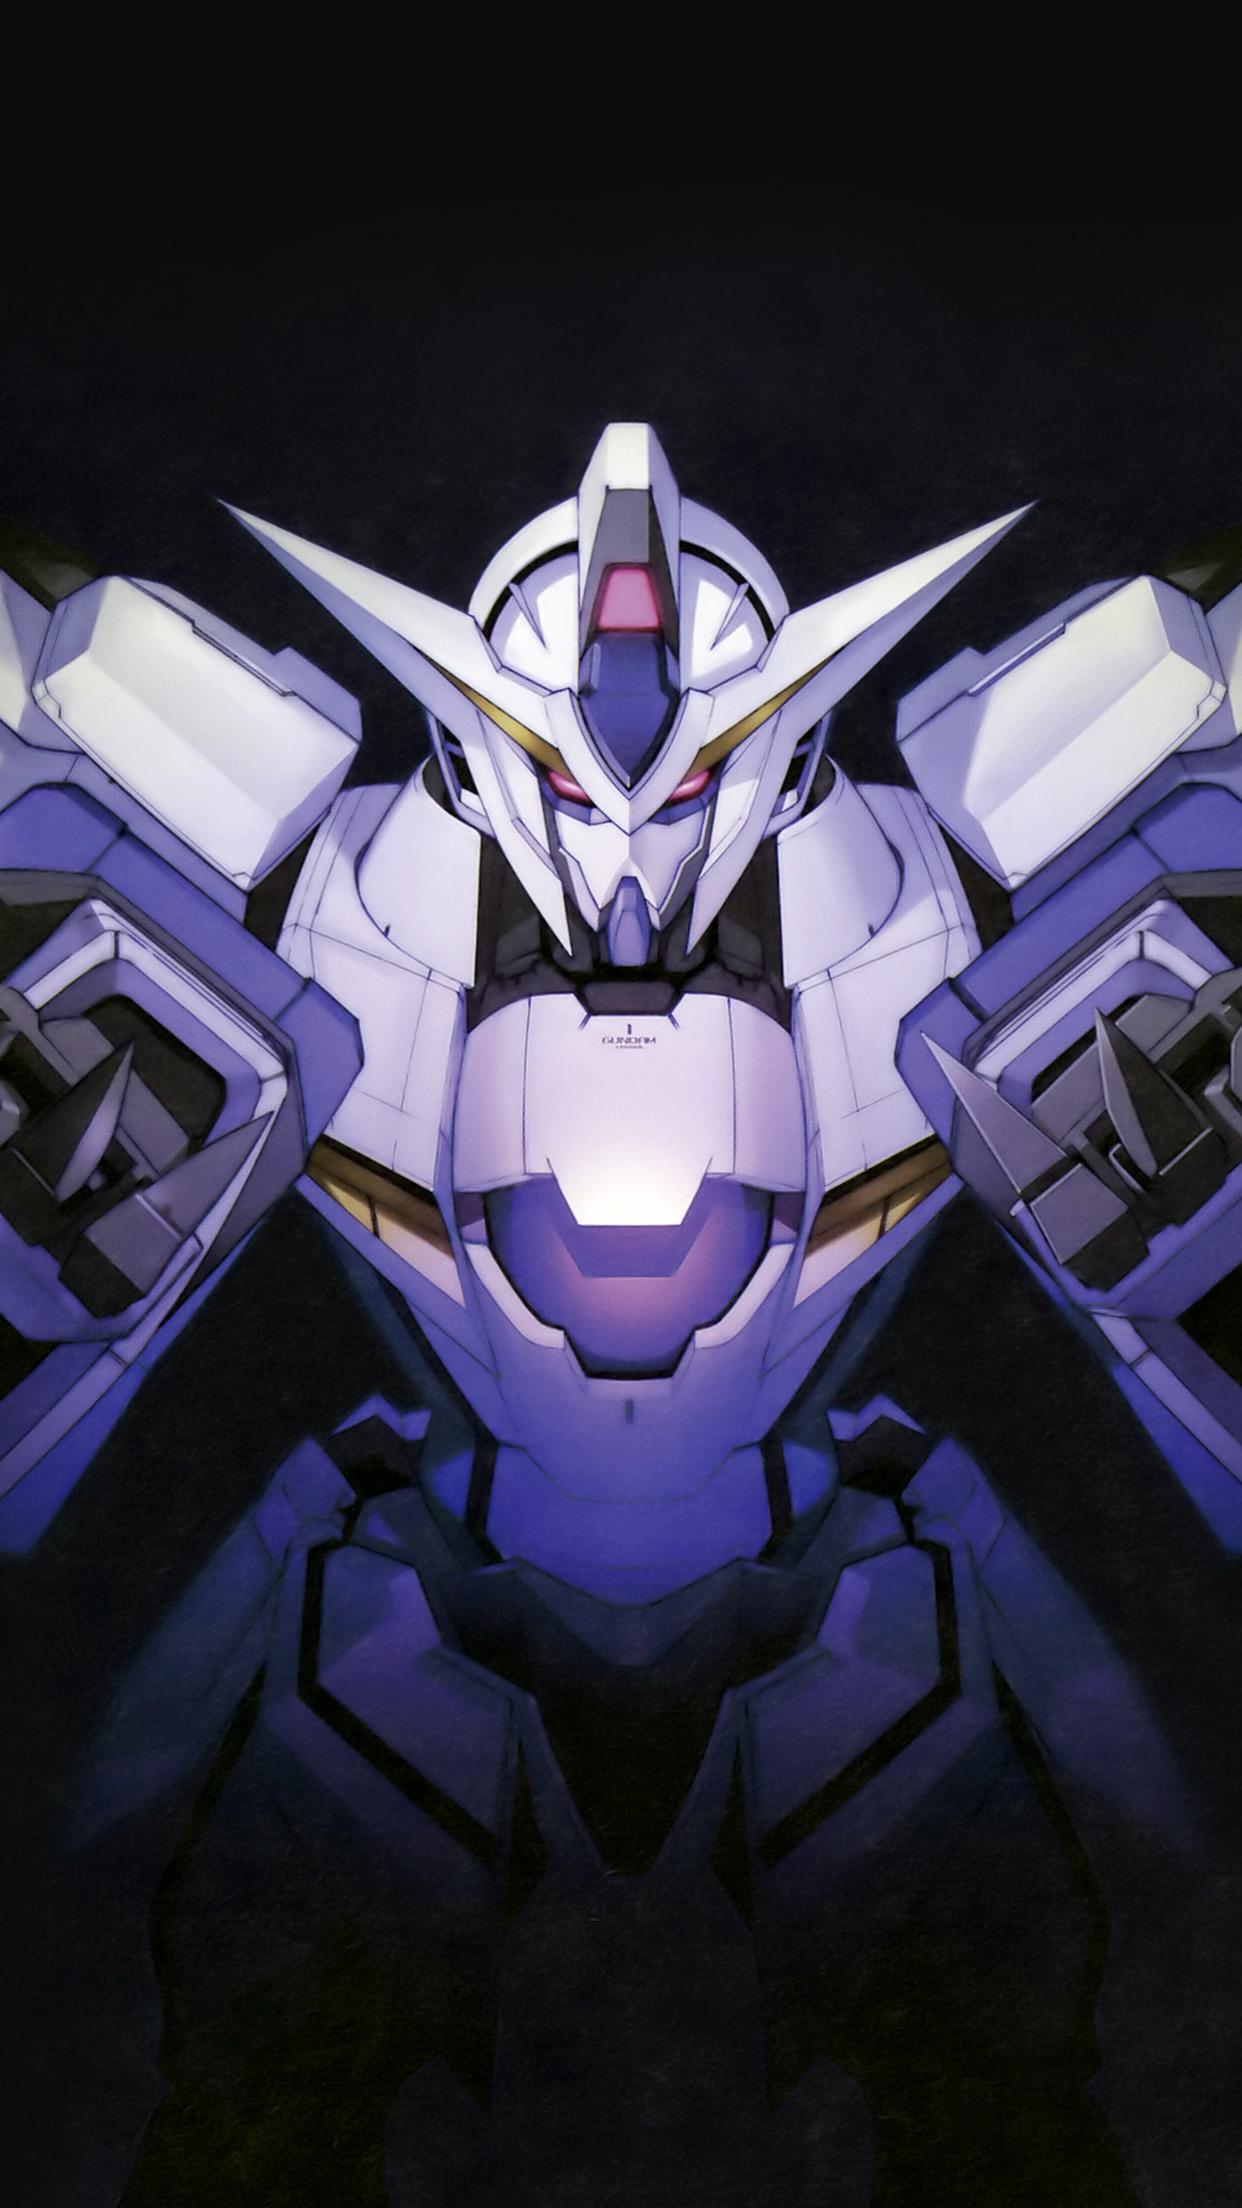 Gundam Art Dark Toy Game Illust Art Android wallpaper HD